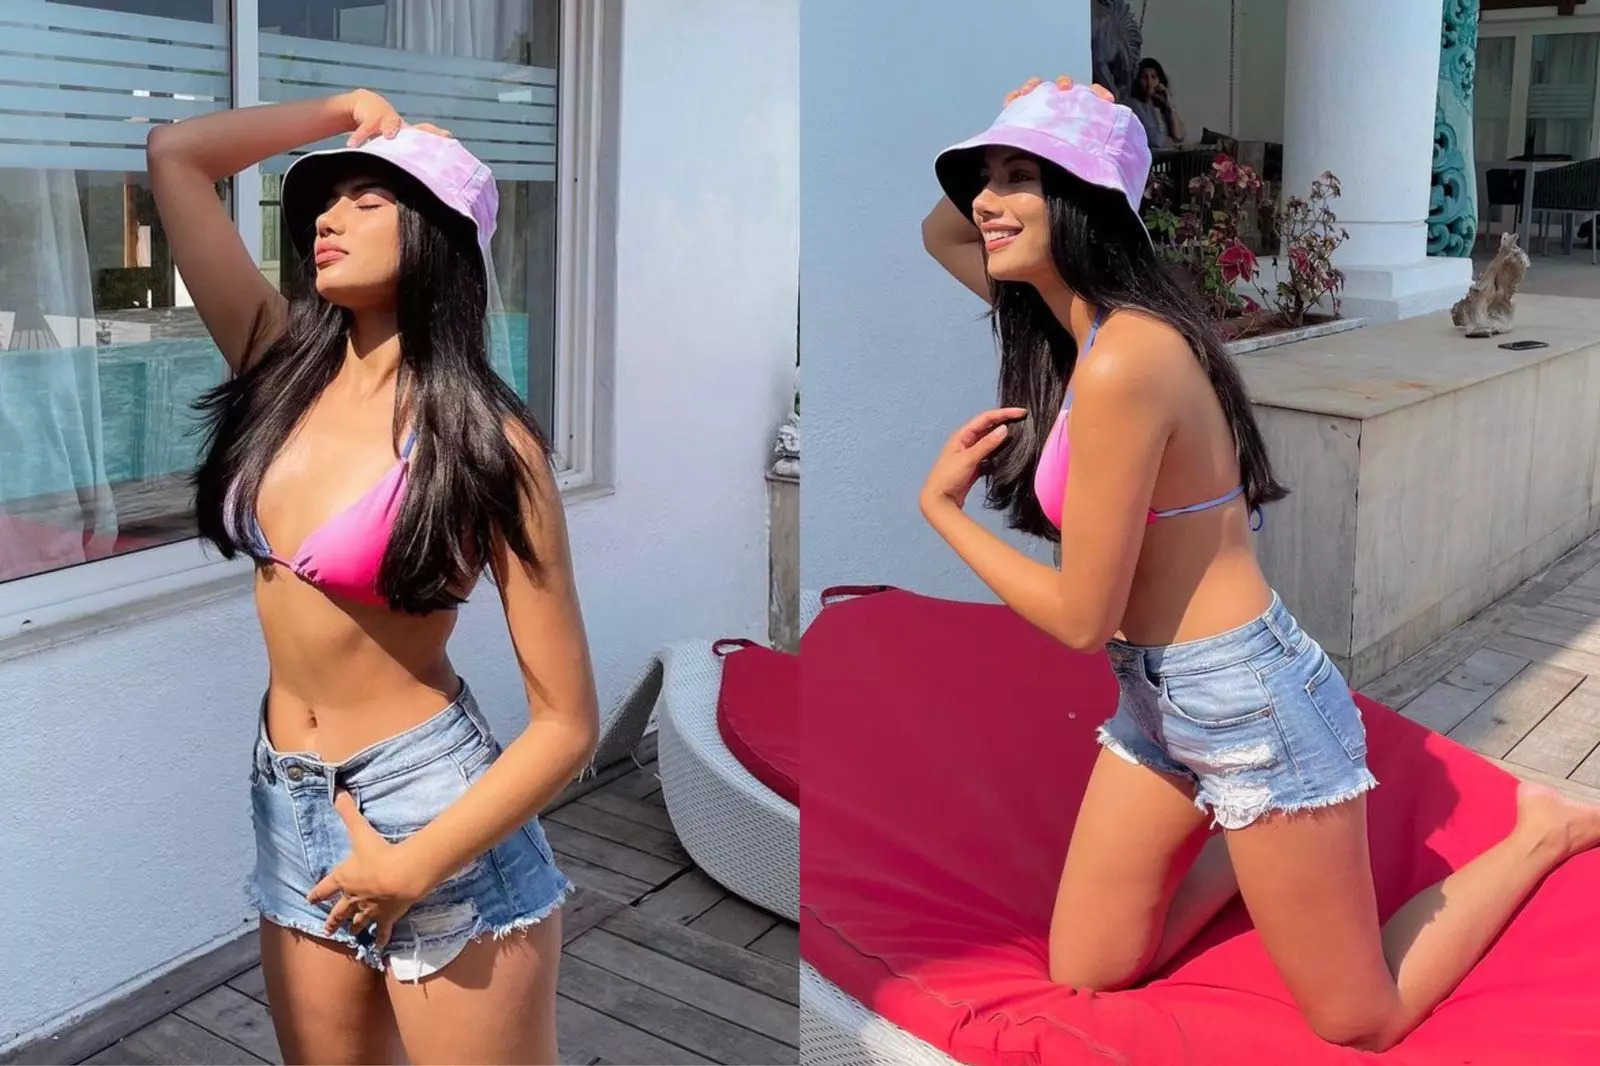 Ritika Khatnani rocks the look in a pink bikini and blue shorts